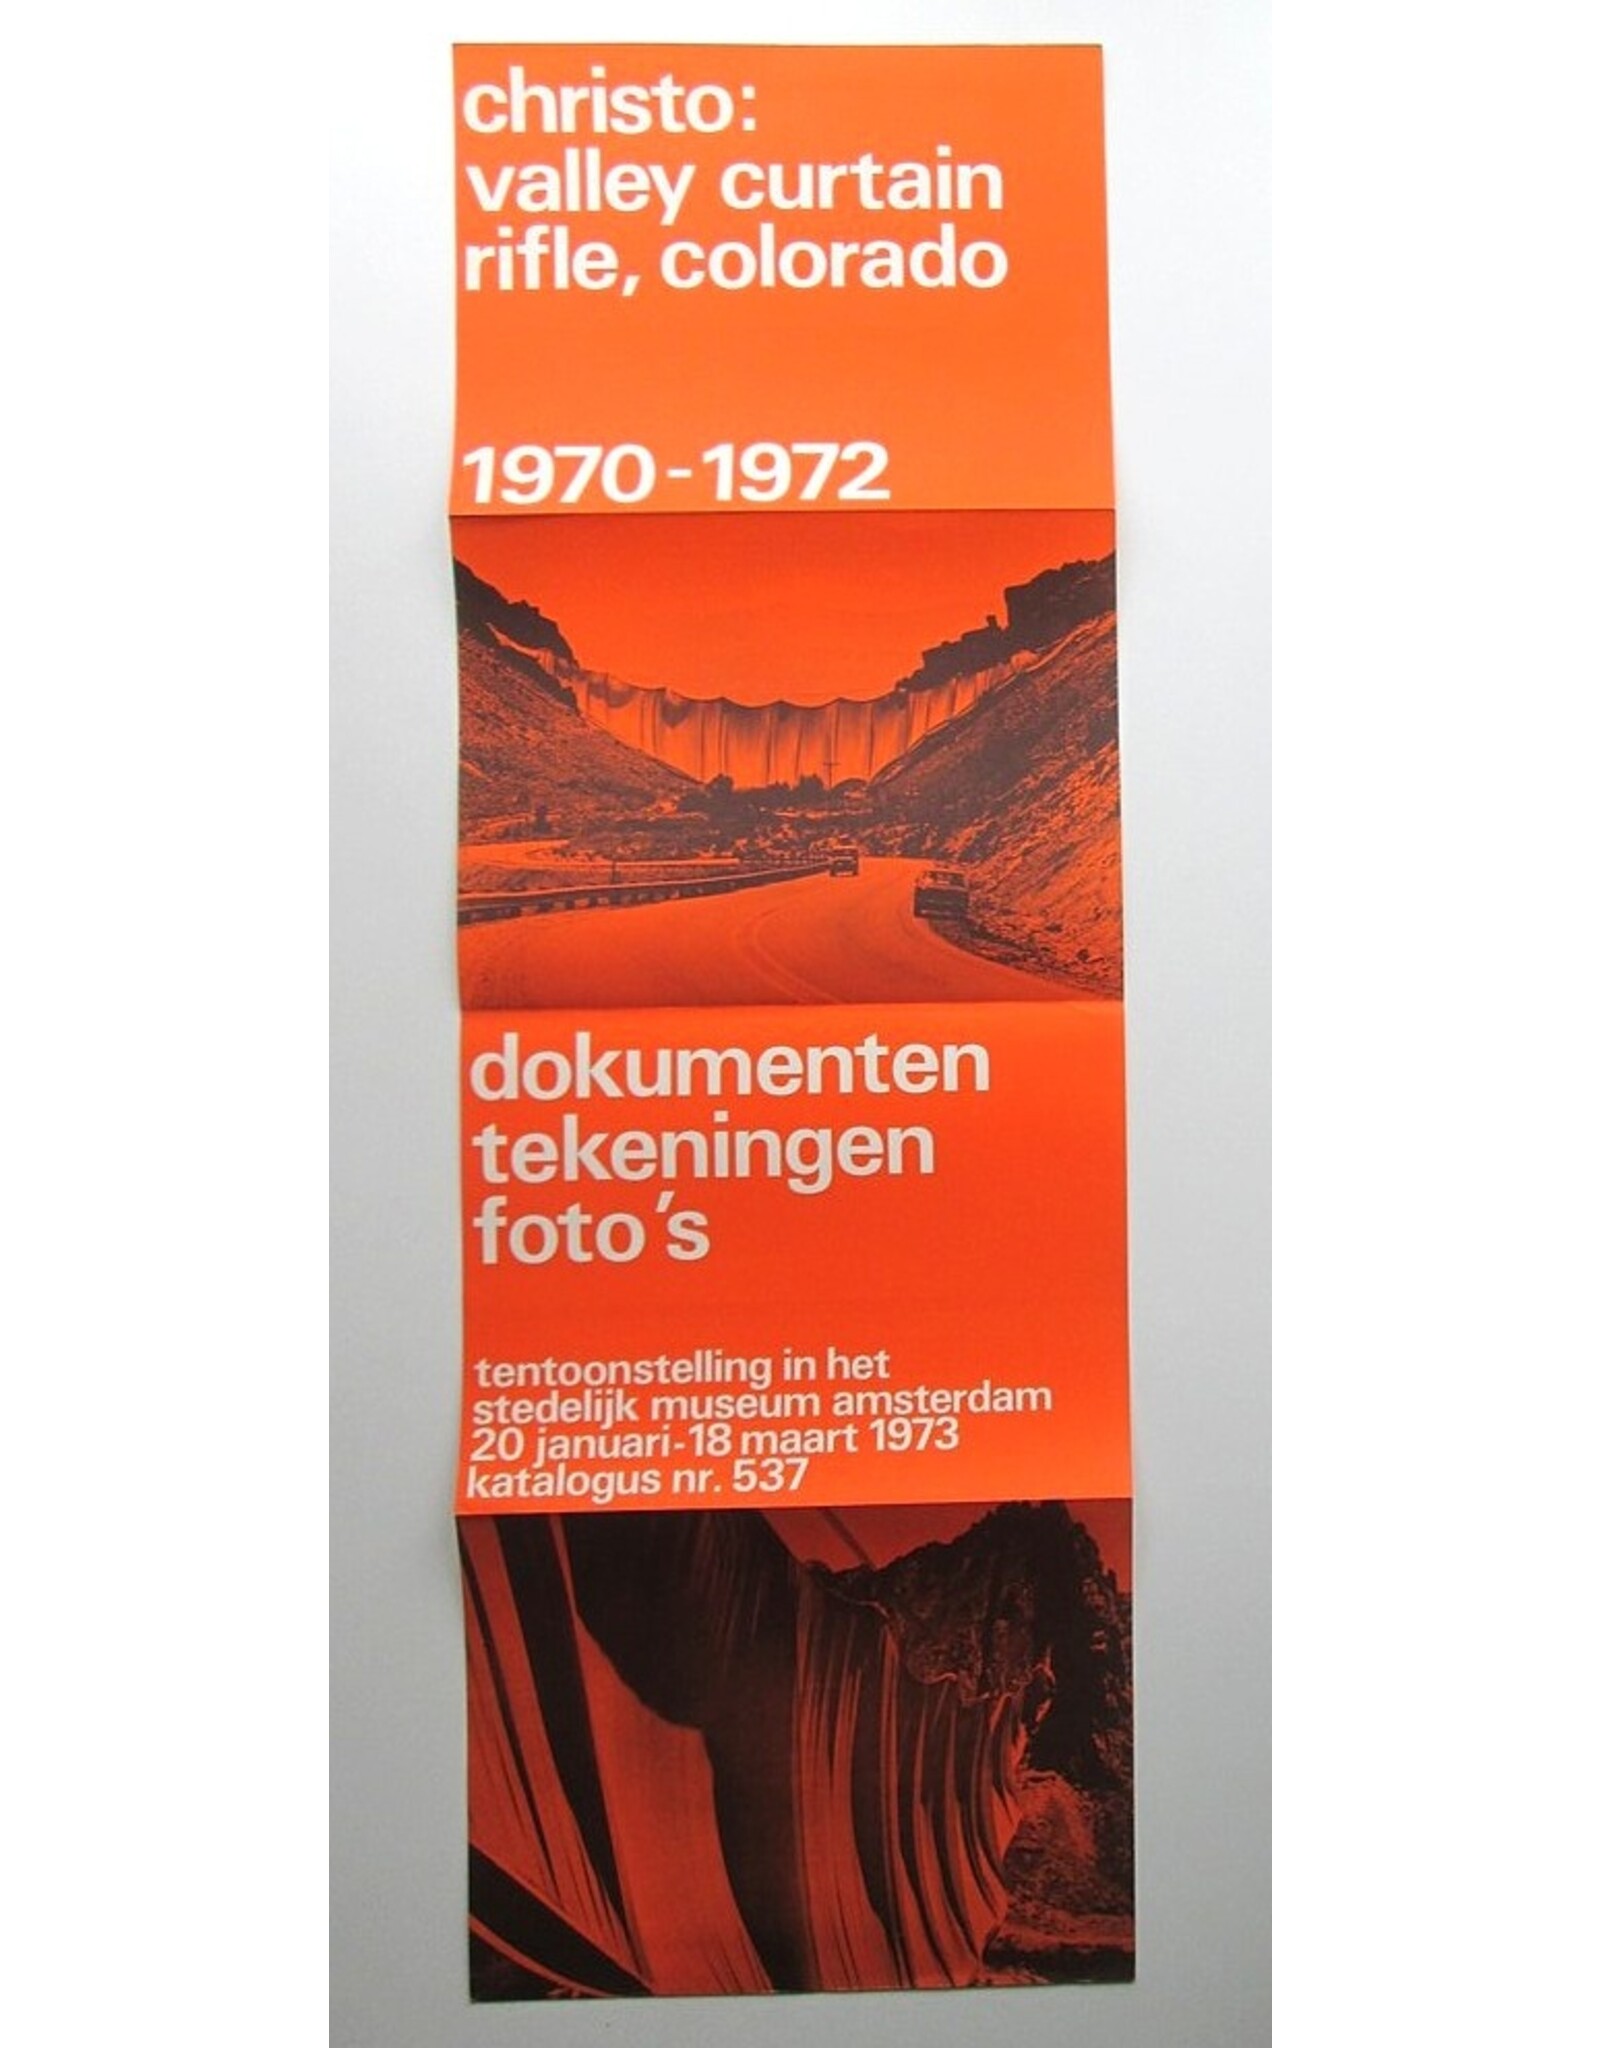 Christo - Valley Curtain Rifle, Colorado 1970-1972. Documenten, Tekeningen en Foto's. 20 januari - 18 maart 1973